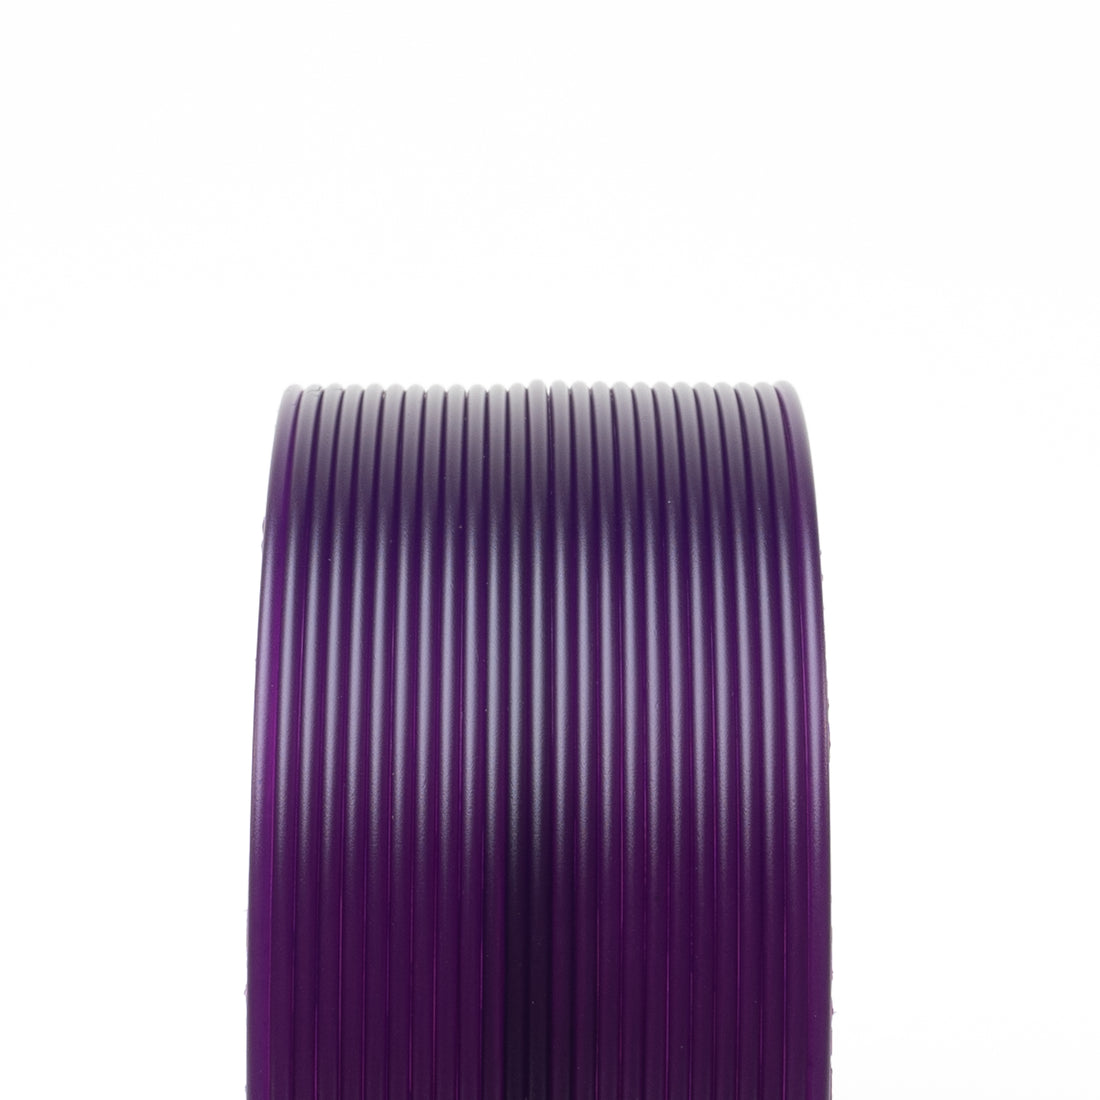 Protopasta HTPLA - 1.75mm (1kg) - Bobbi's Purple Iris